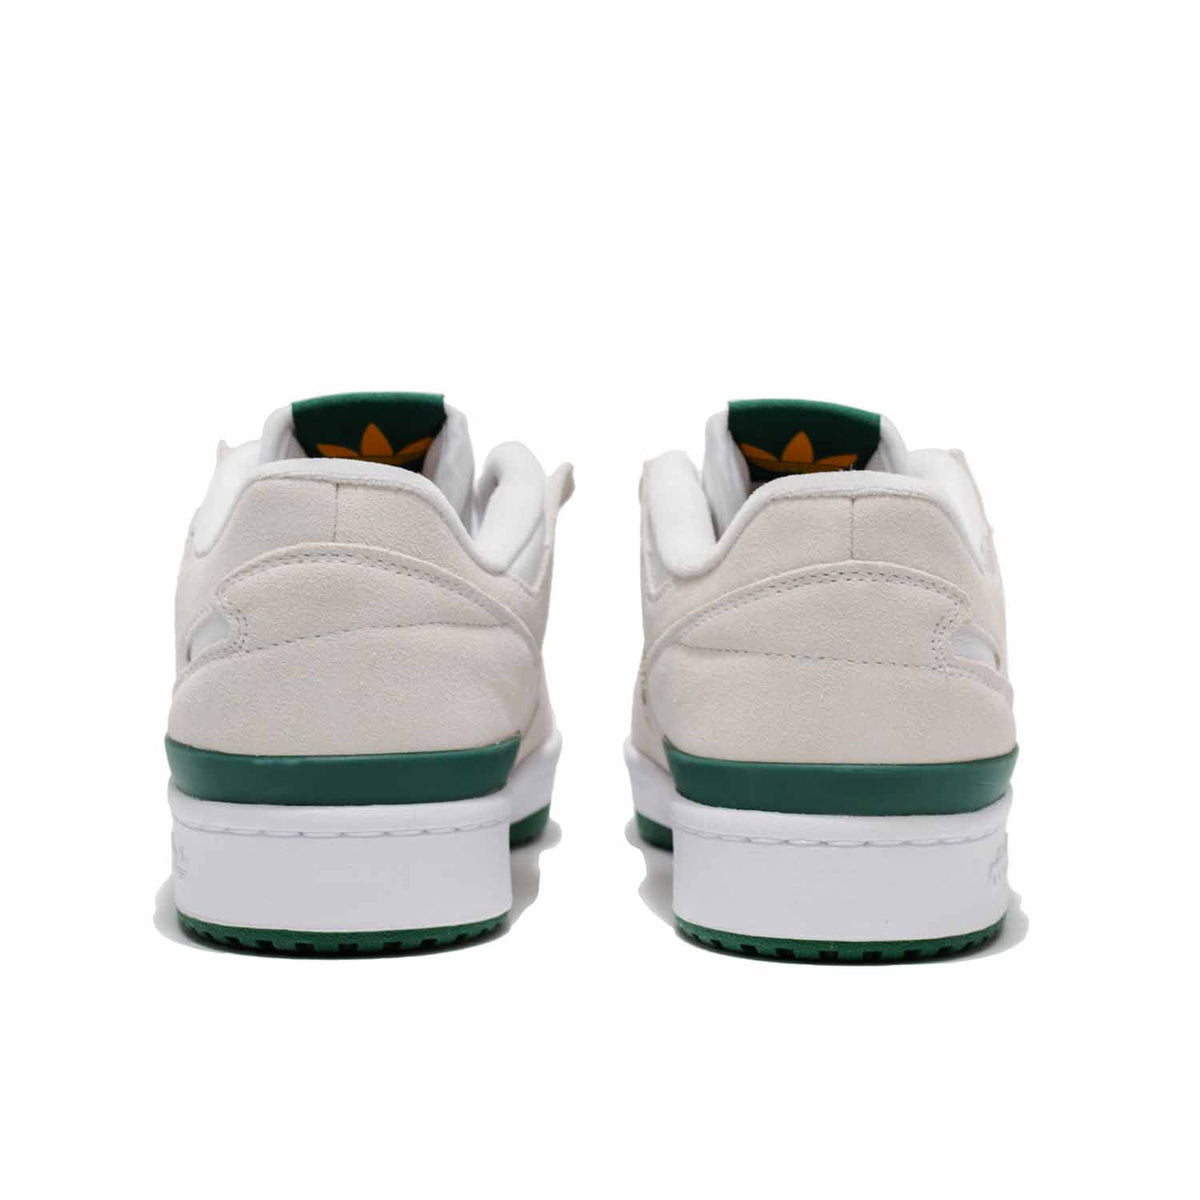 Adidas - Forum 84 Low ADV - Crystal White/Dark Green